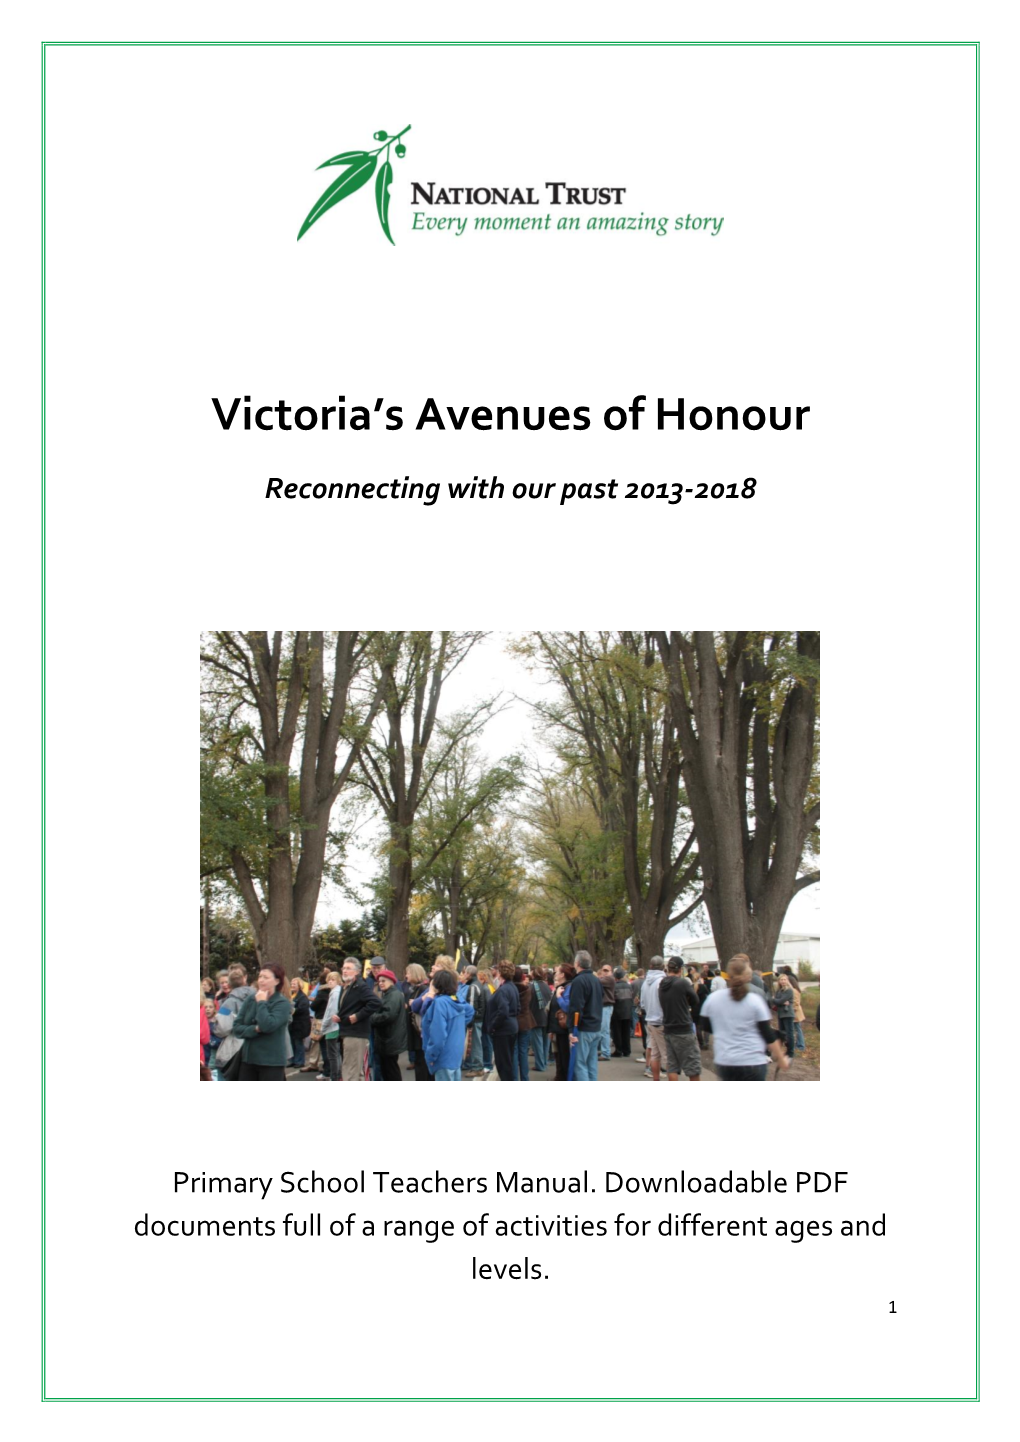 Victoria's Avenues of Honour